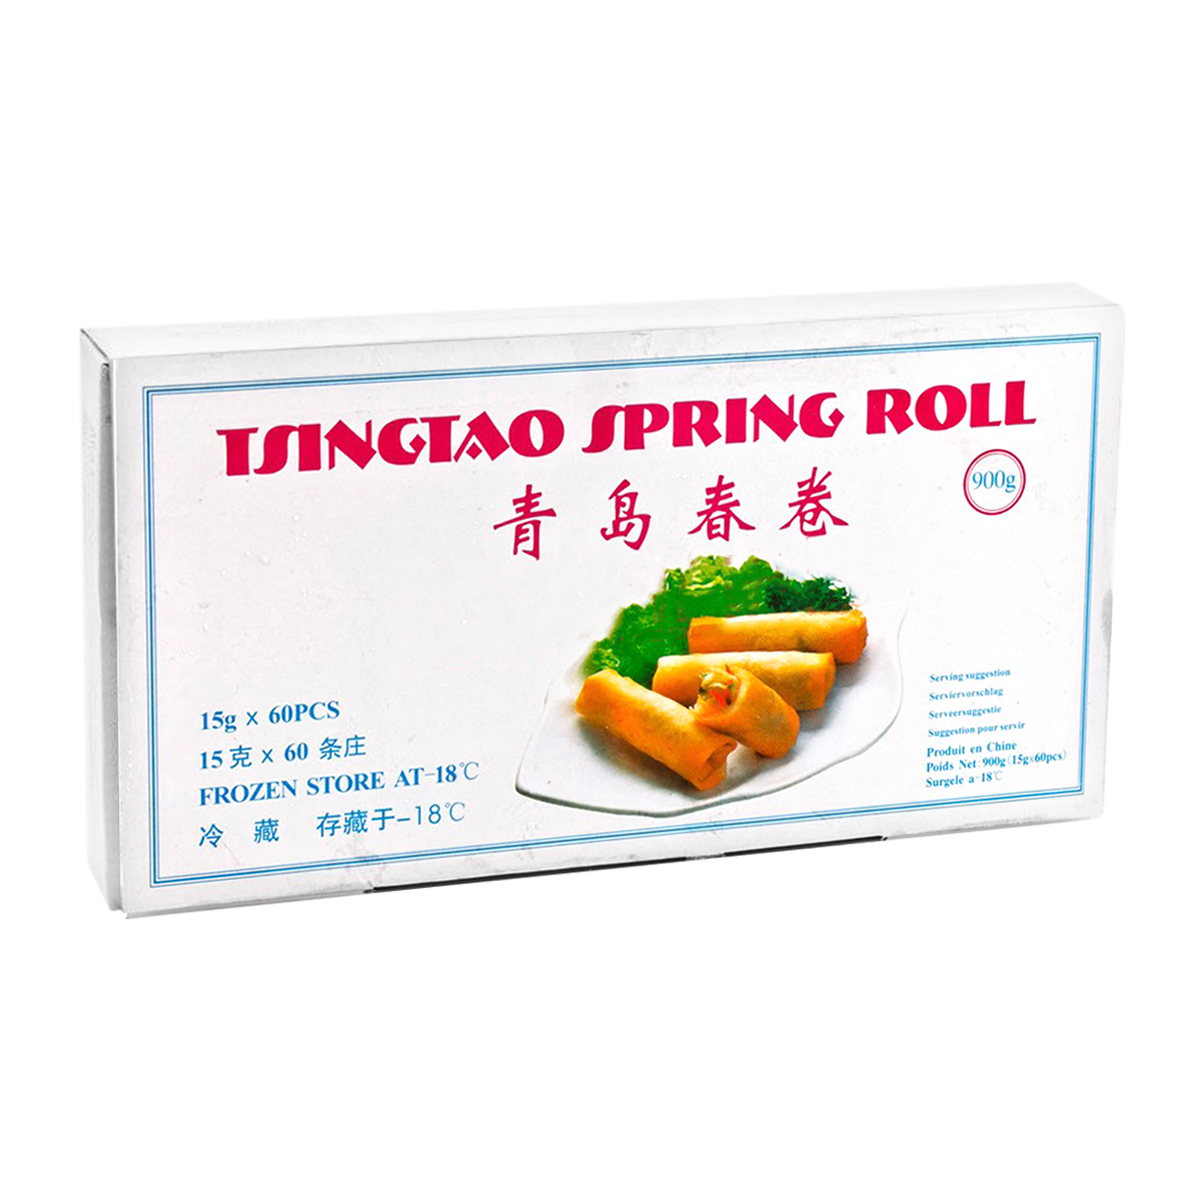 Exclusiv in magazine - Spring rolls cu legume TSINGTAO (60x15g) 900g, asianfood.ro